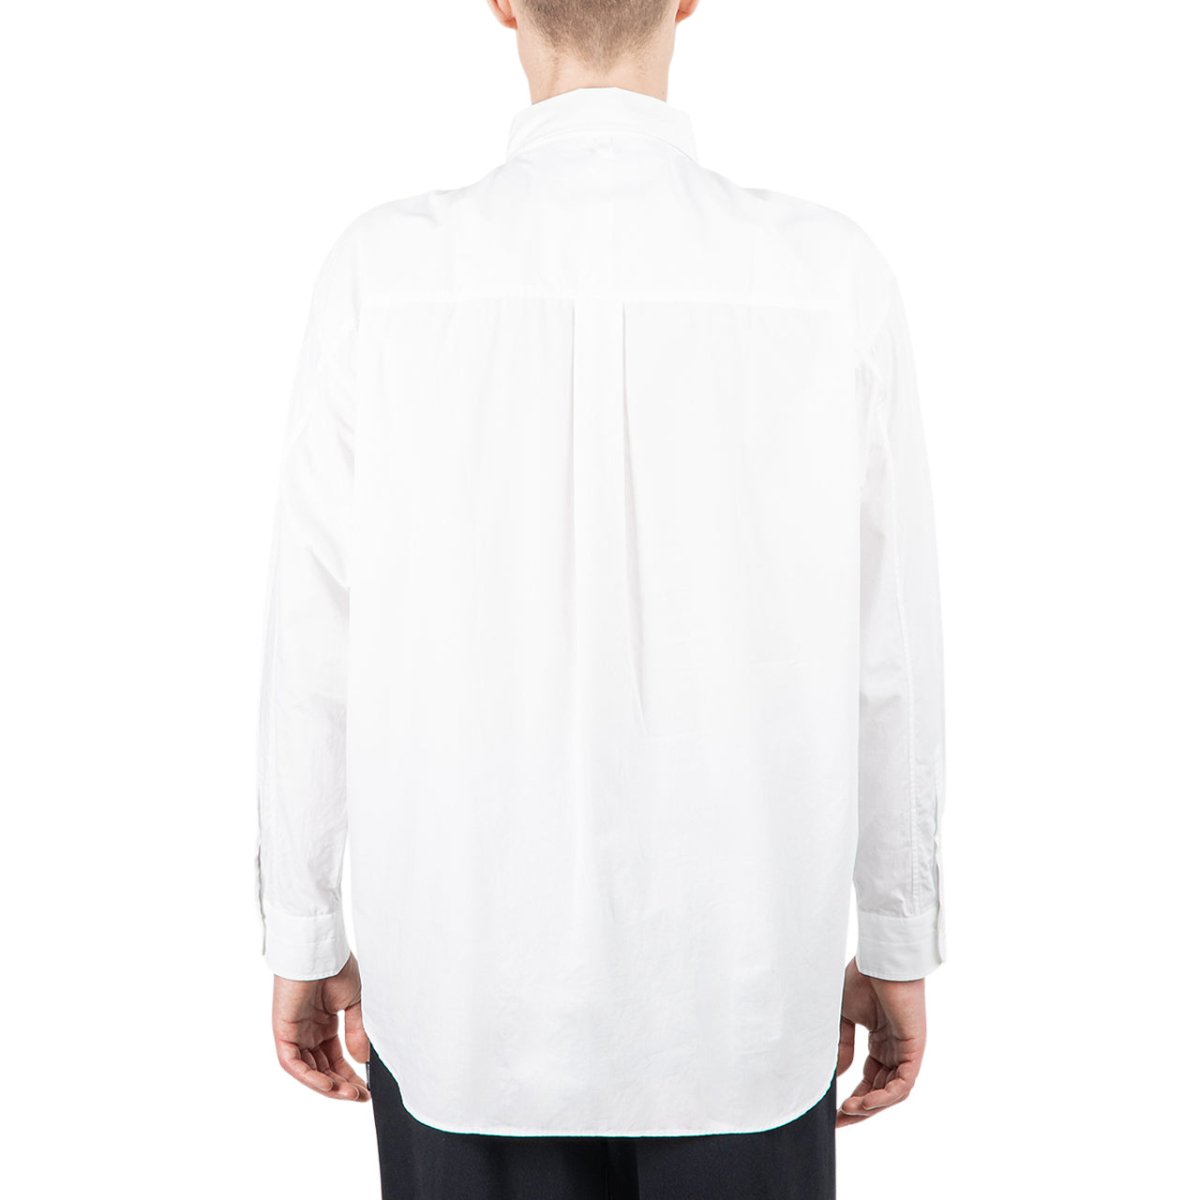 Neighborhood Trad / C-Shirt (Weiß)  - Allike Store